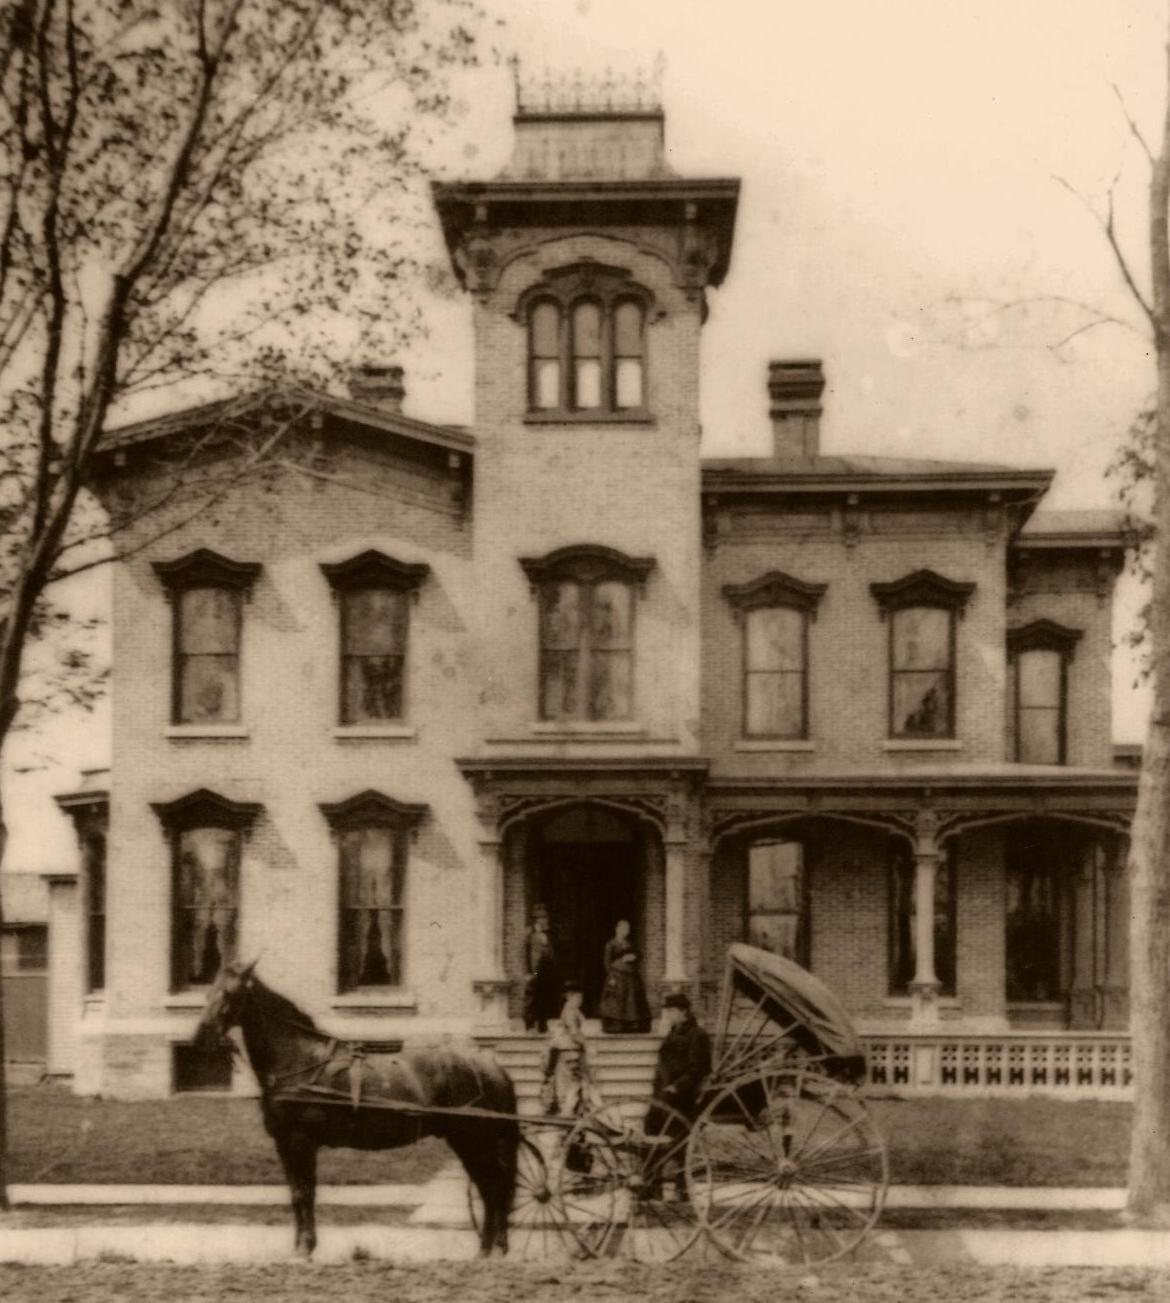 The Haunted Farnam Mansion of Oneida, NY